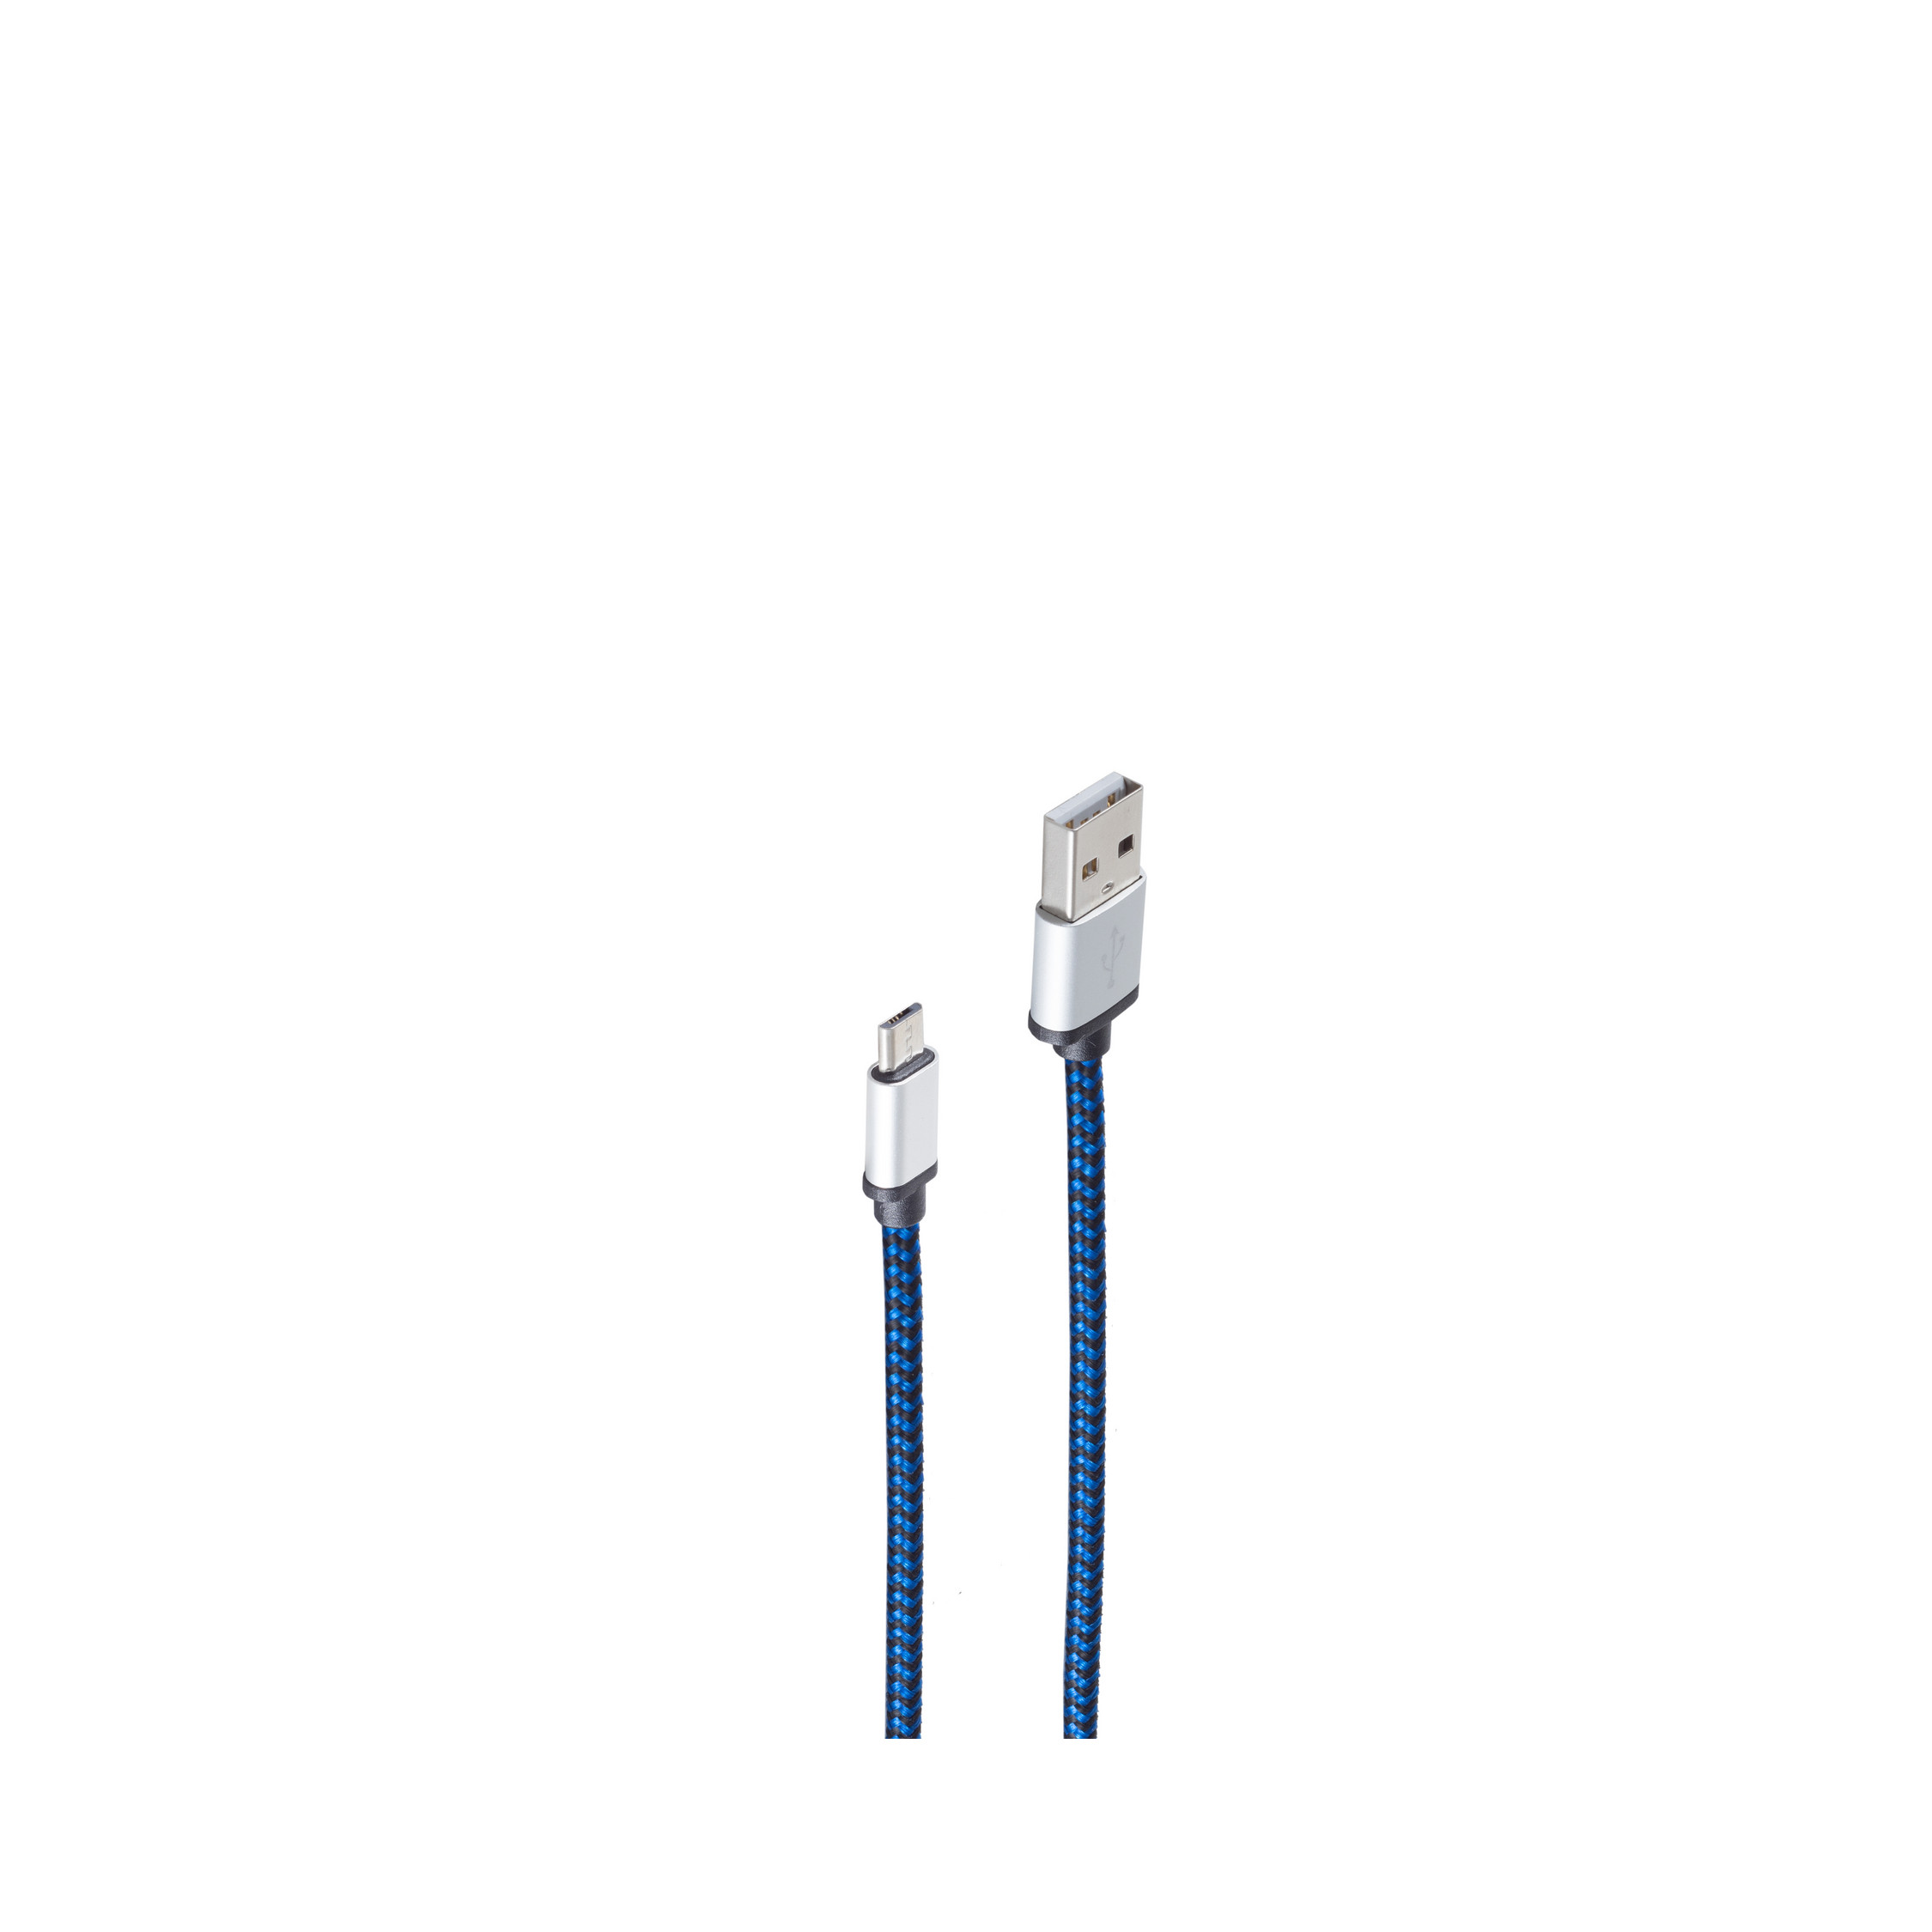 SHIVERPEAKS USB-Ladekabel blau blau A 2m, 2 Micro B, Ladekabel, USB m, auf Stecker USB